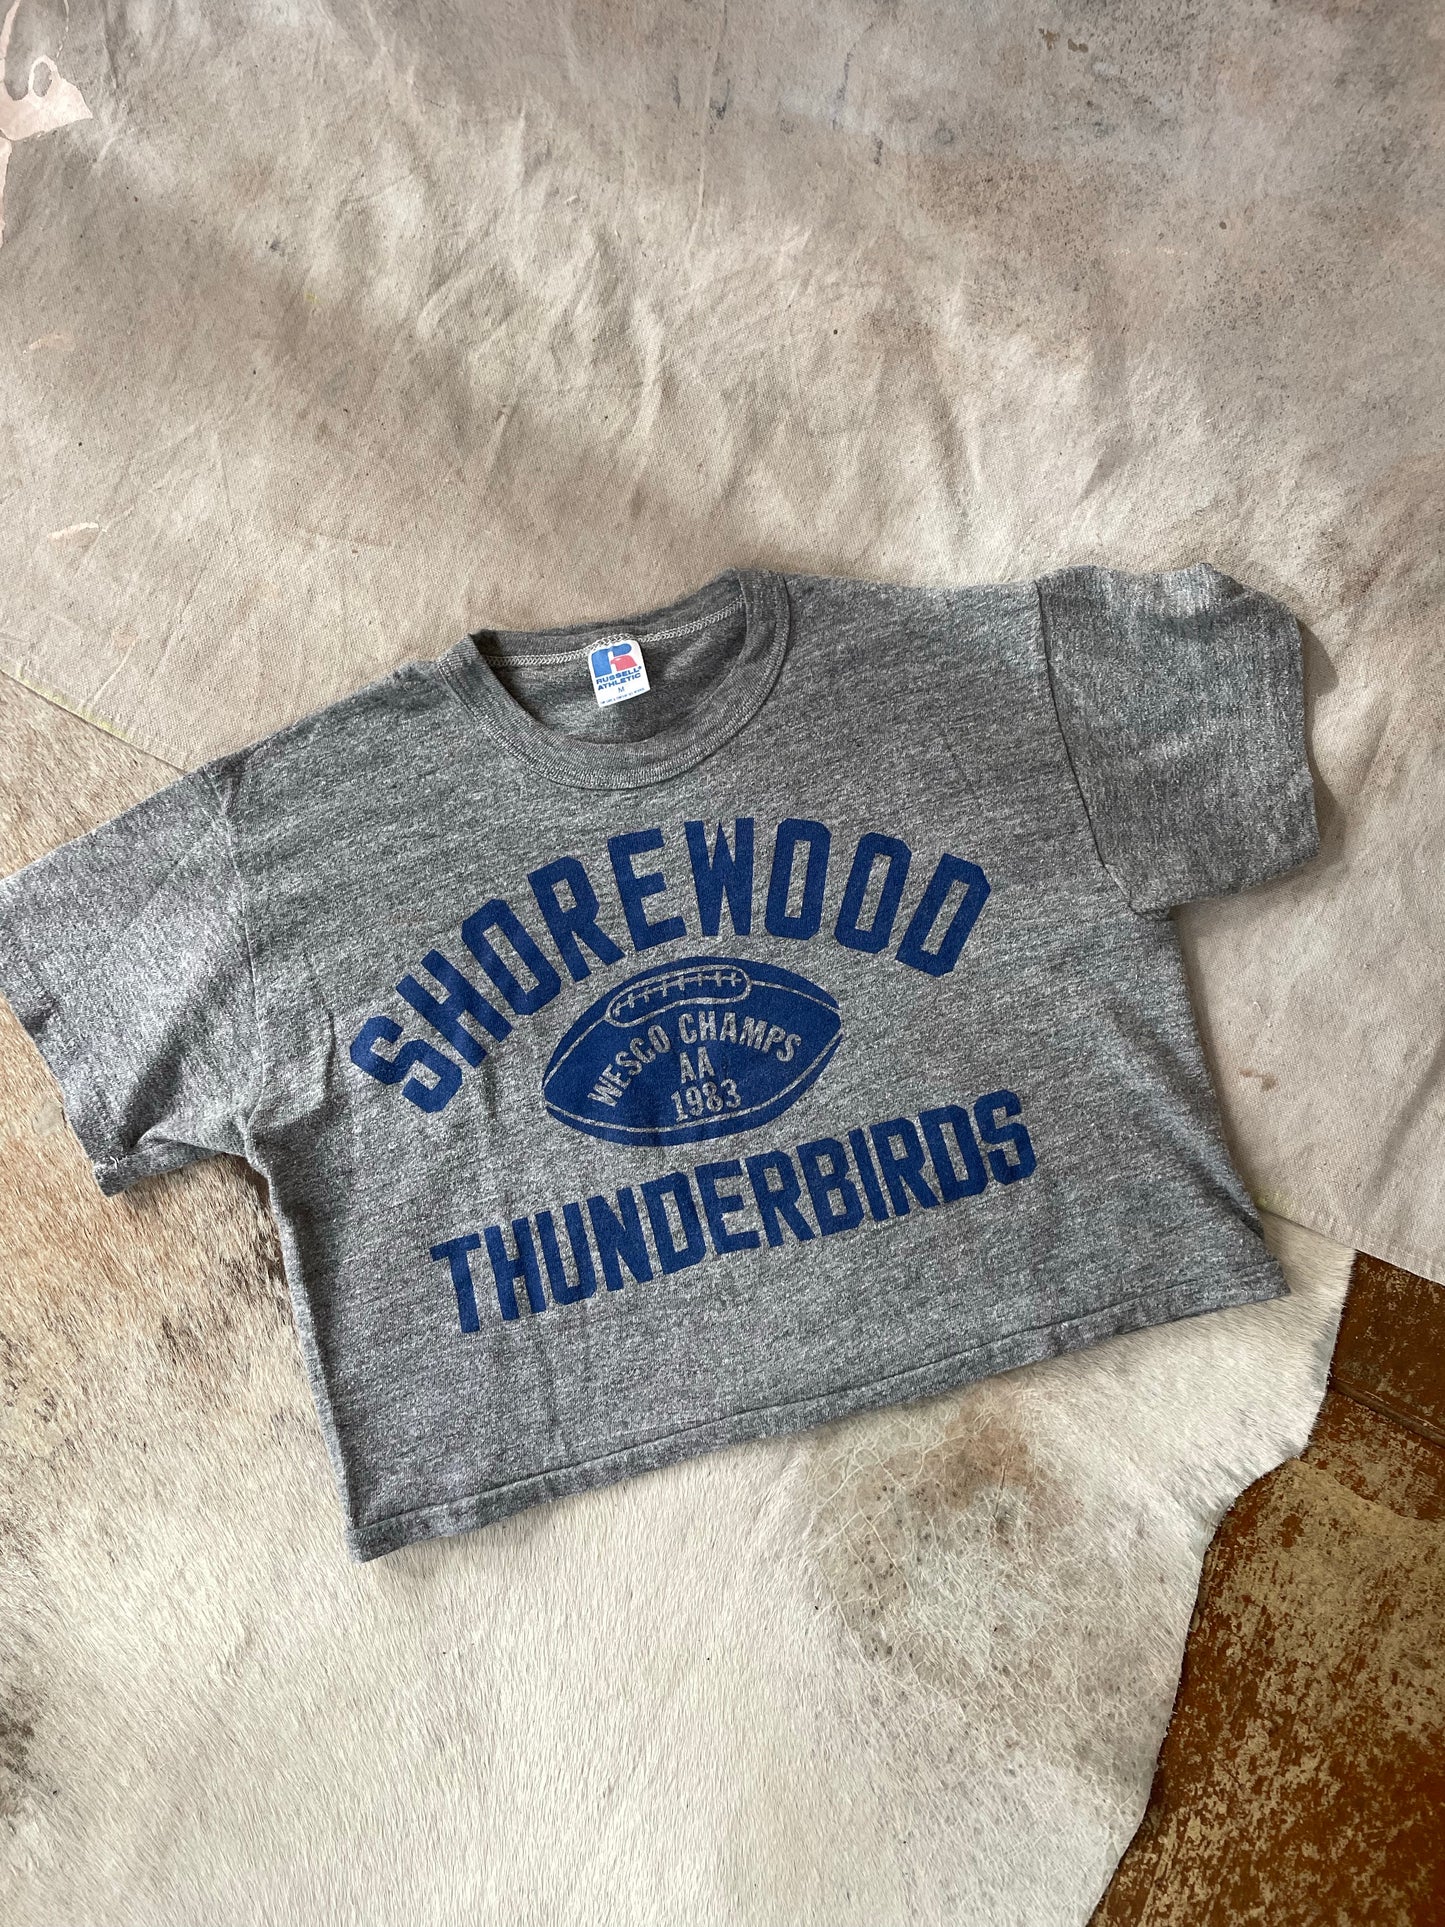 Shorewood Thunderbirds WESCO AA Champs 1983 Cropped Tee